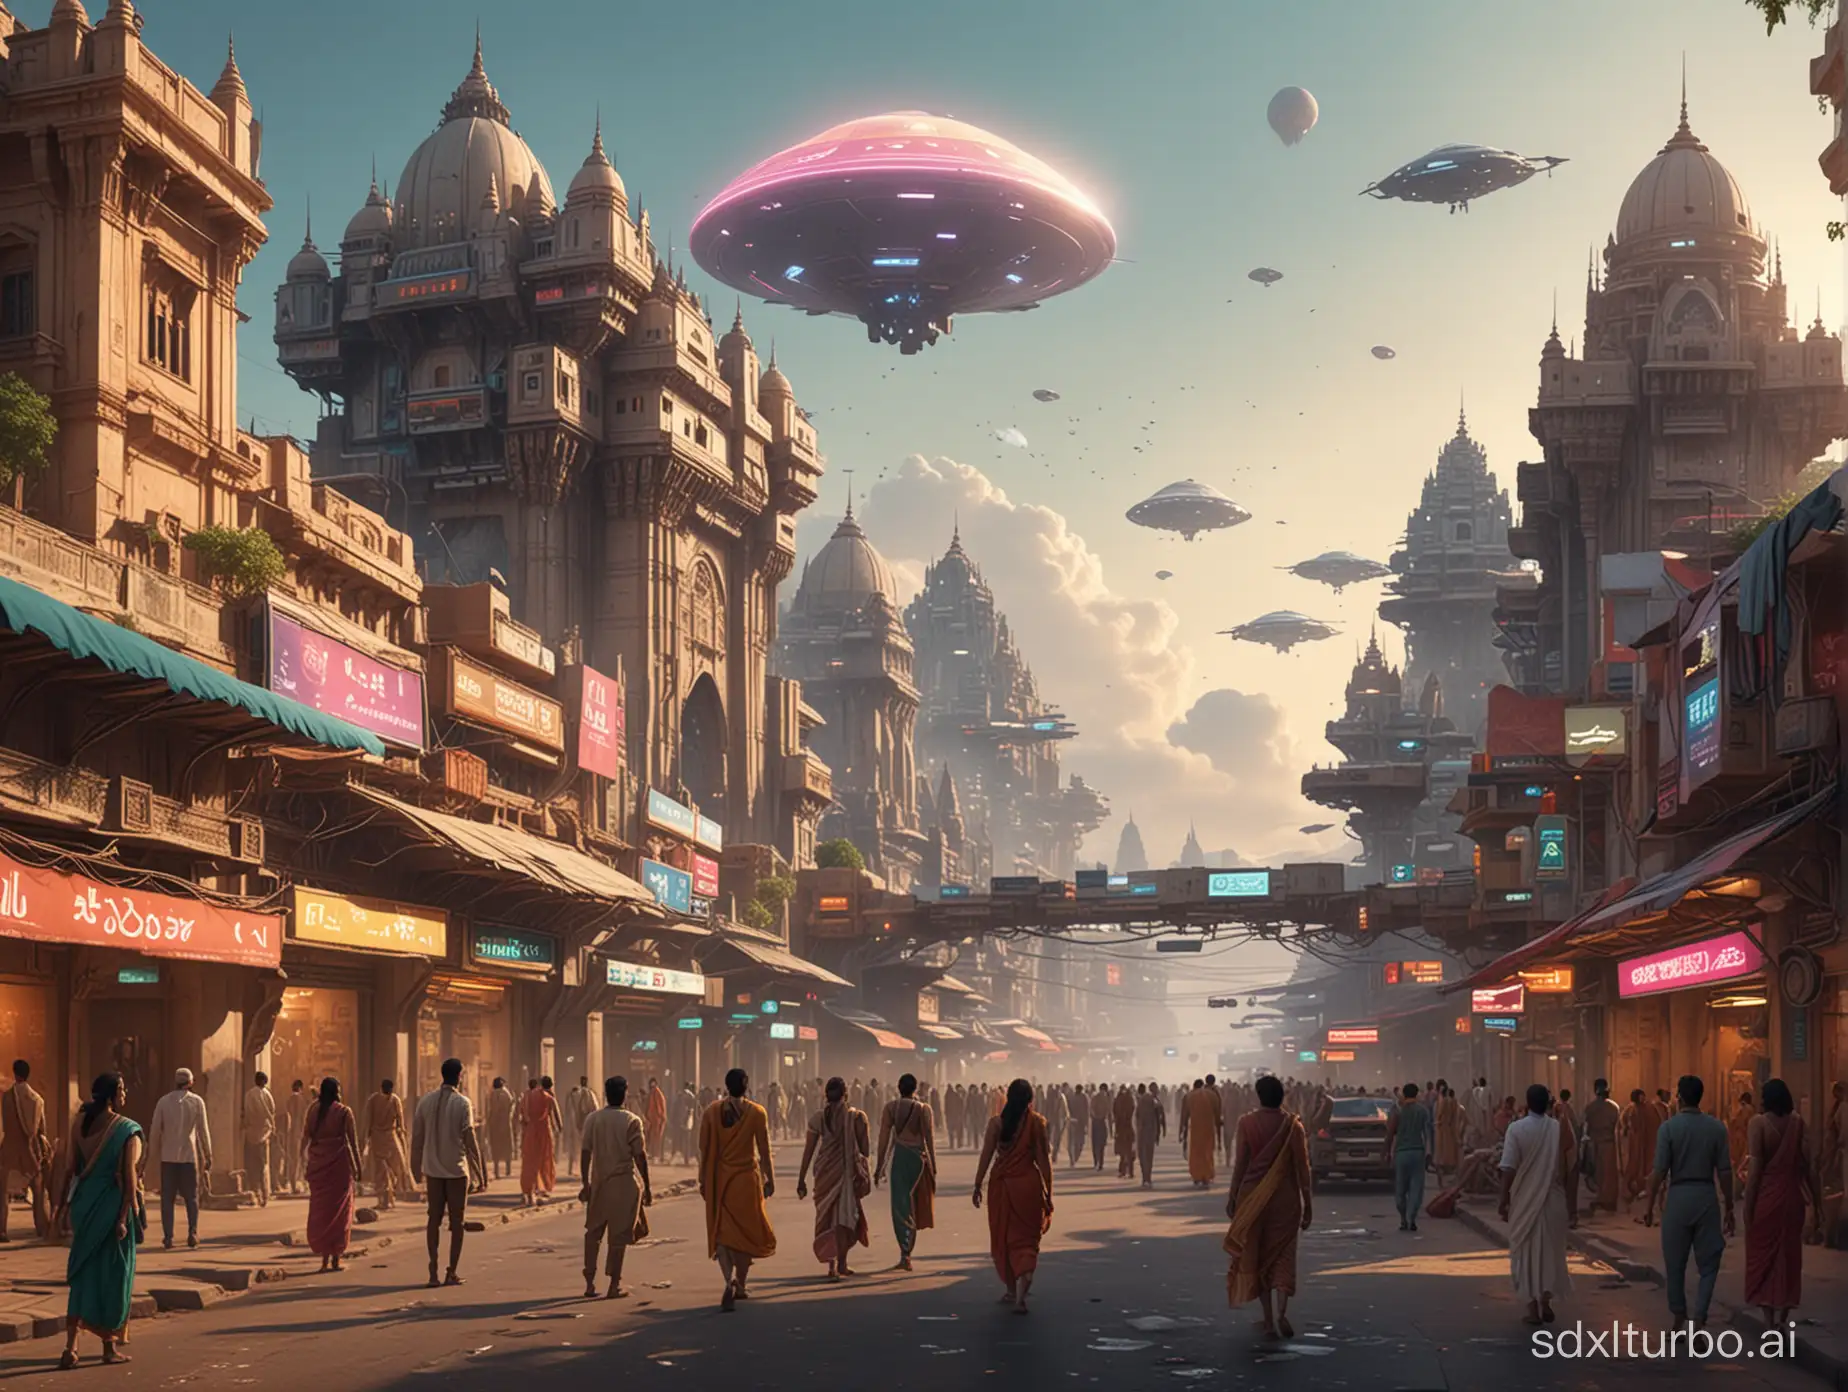 Futuristic-SciFi-Utopian-City-with-Ancient-Indian-Architecture-and-AI